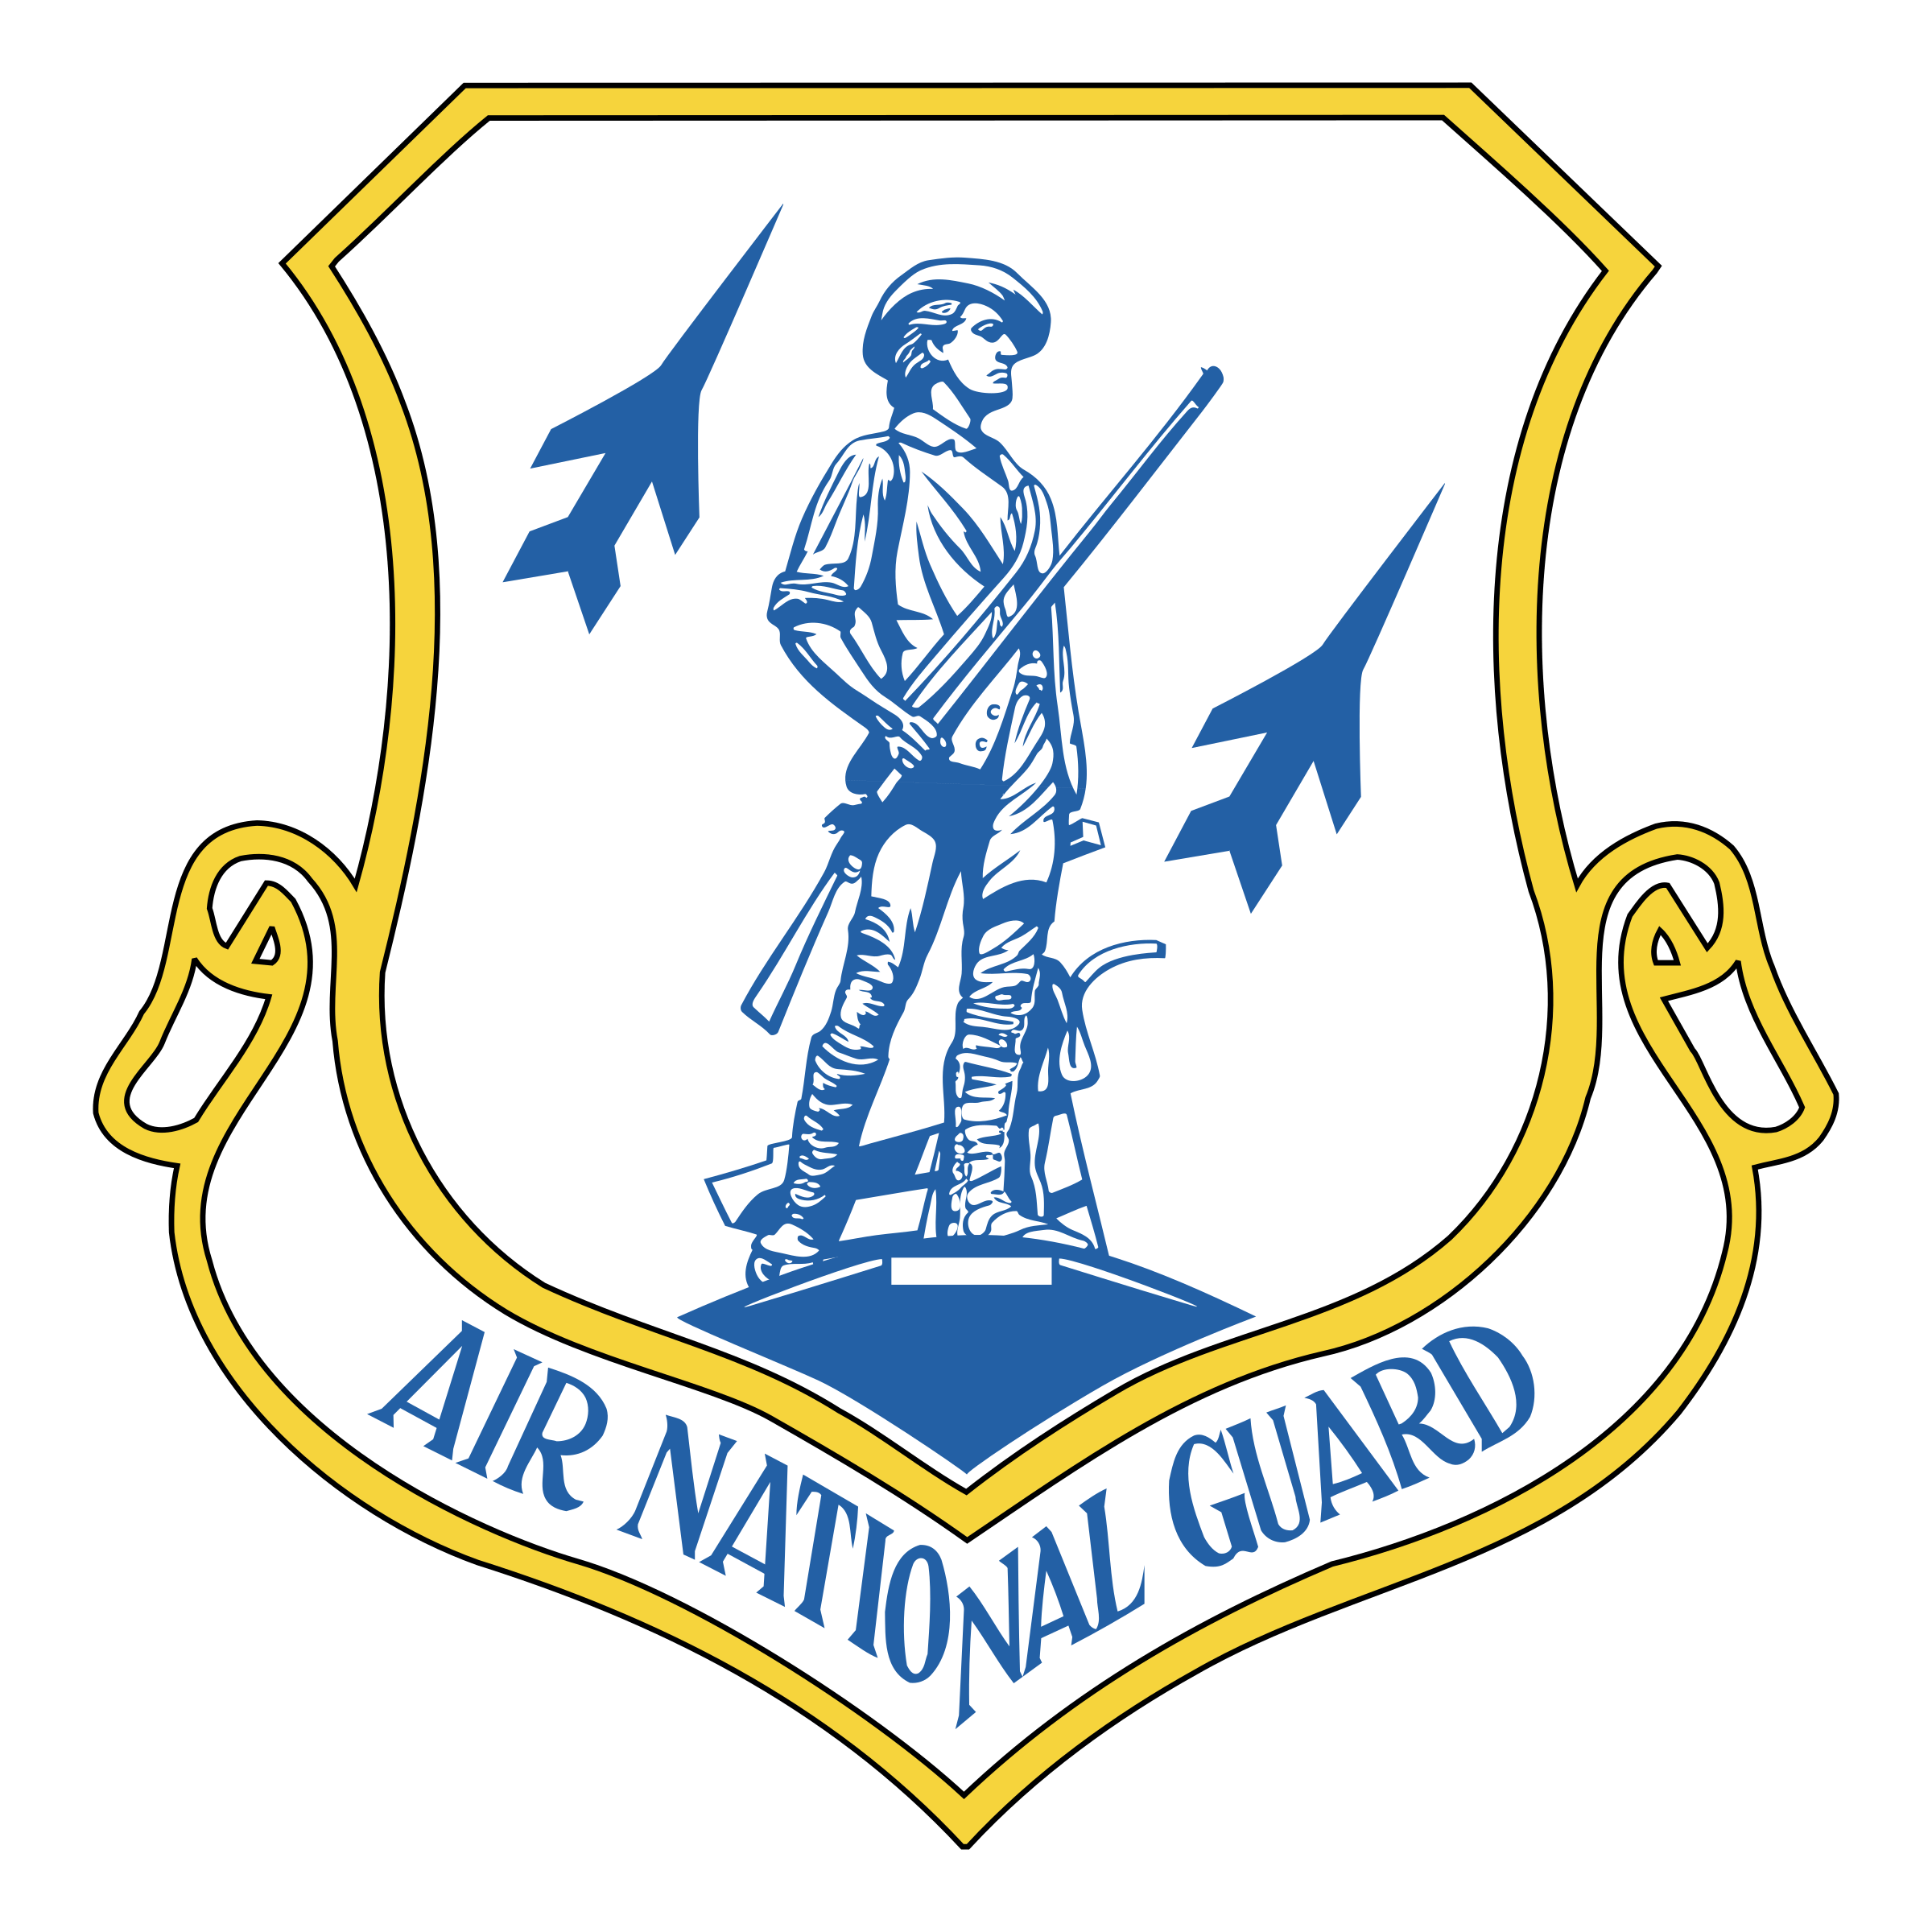 Air National Guard Logo - Air National Guard Logo PNG Transparent & SVG Vector